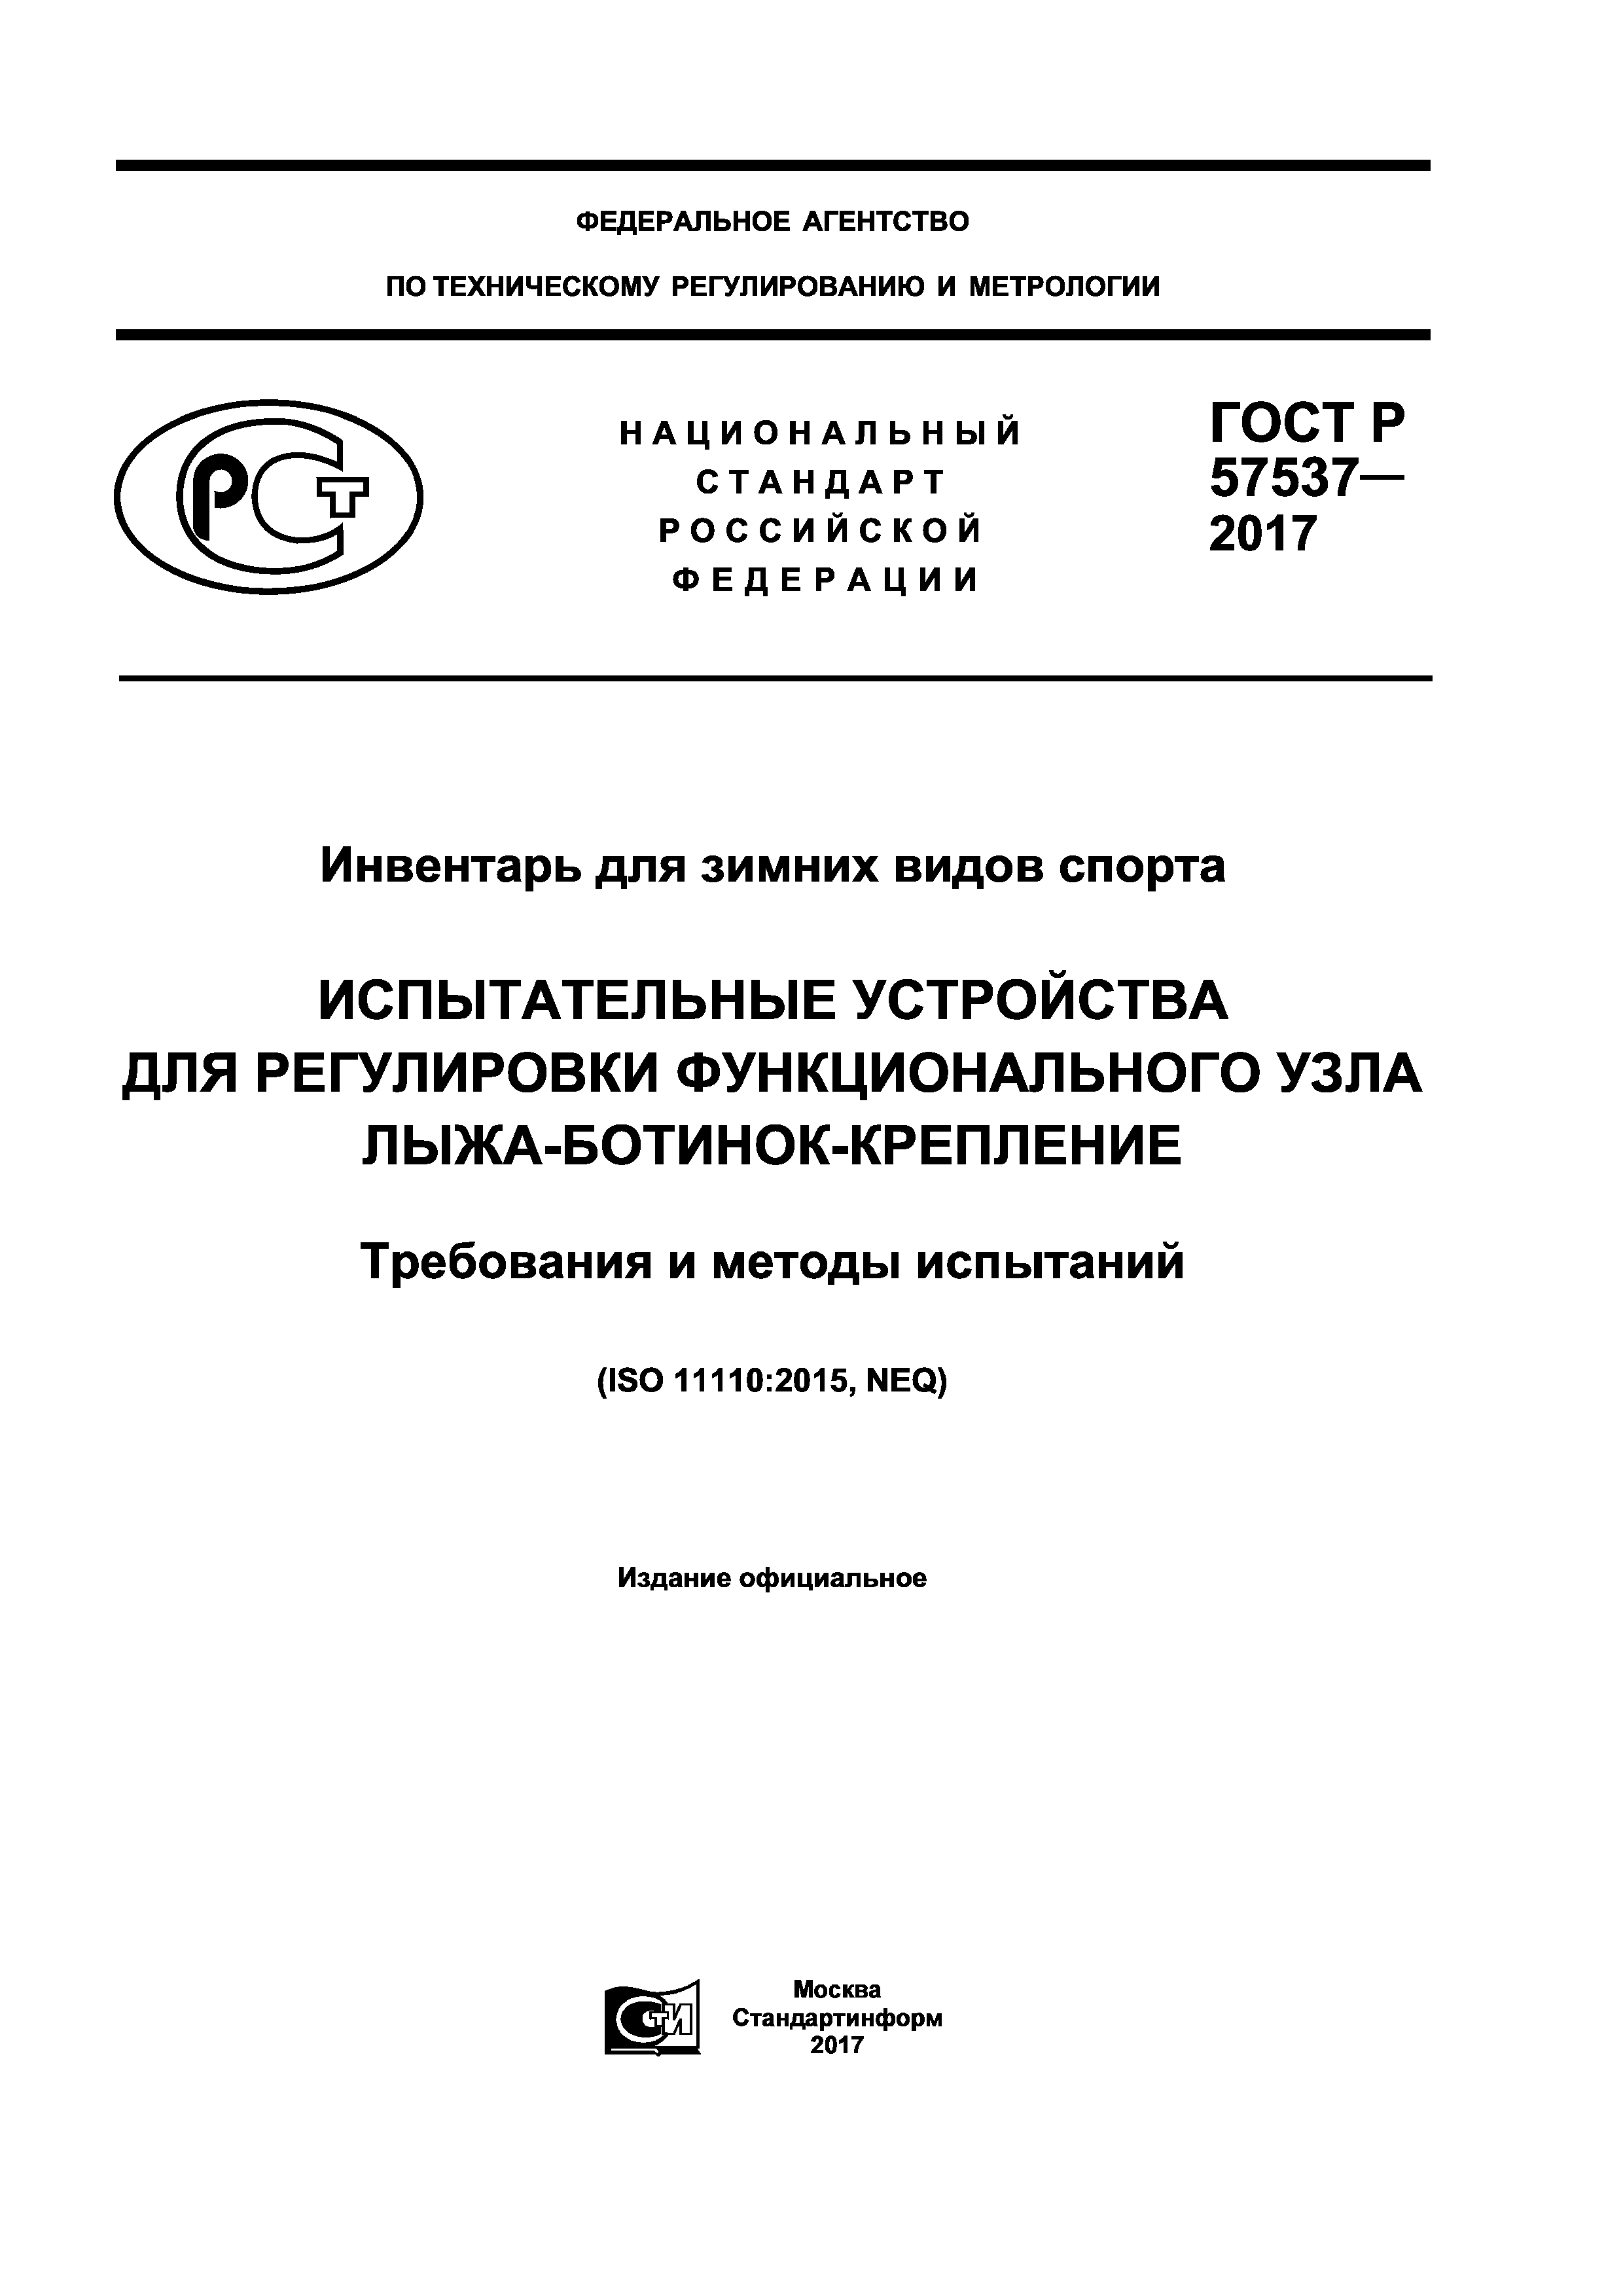 ГОСТ Р 57537-2017